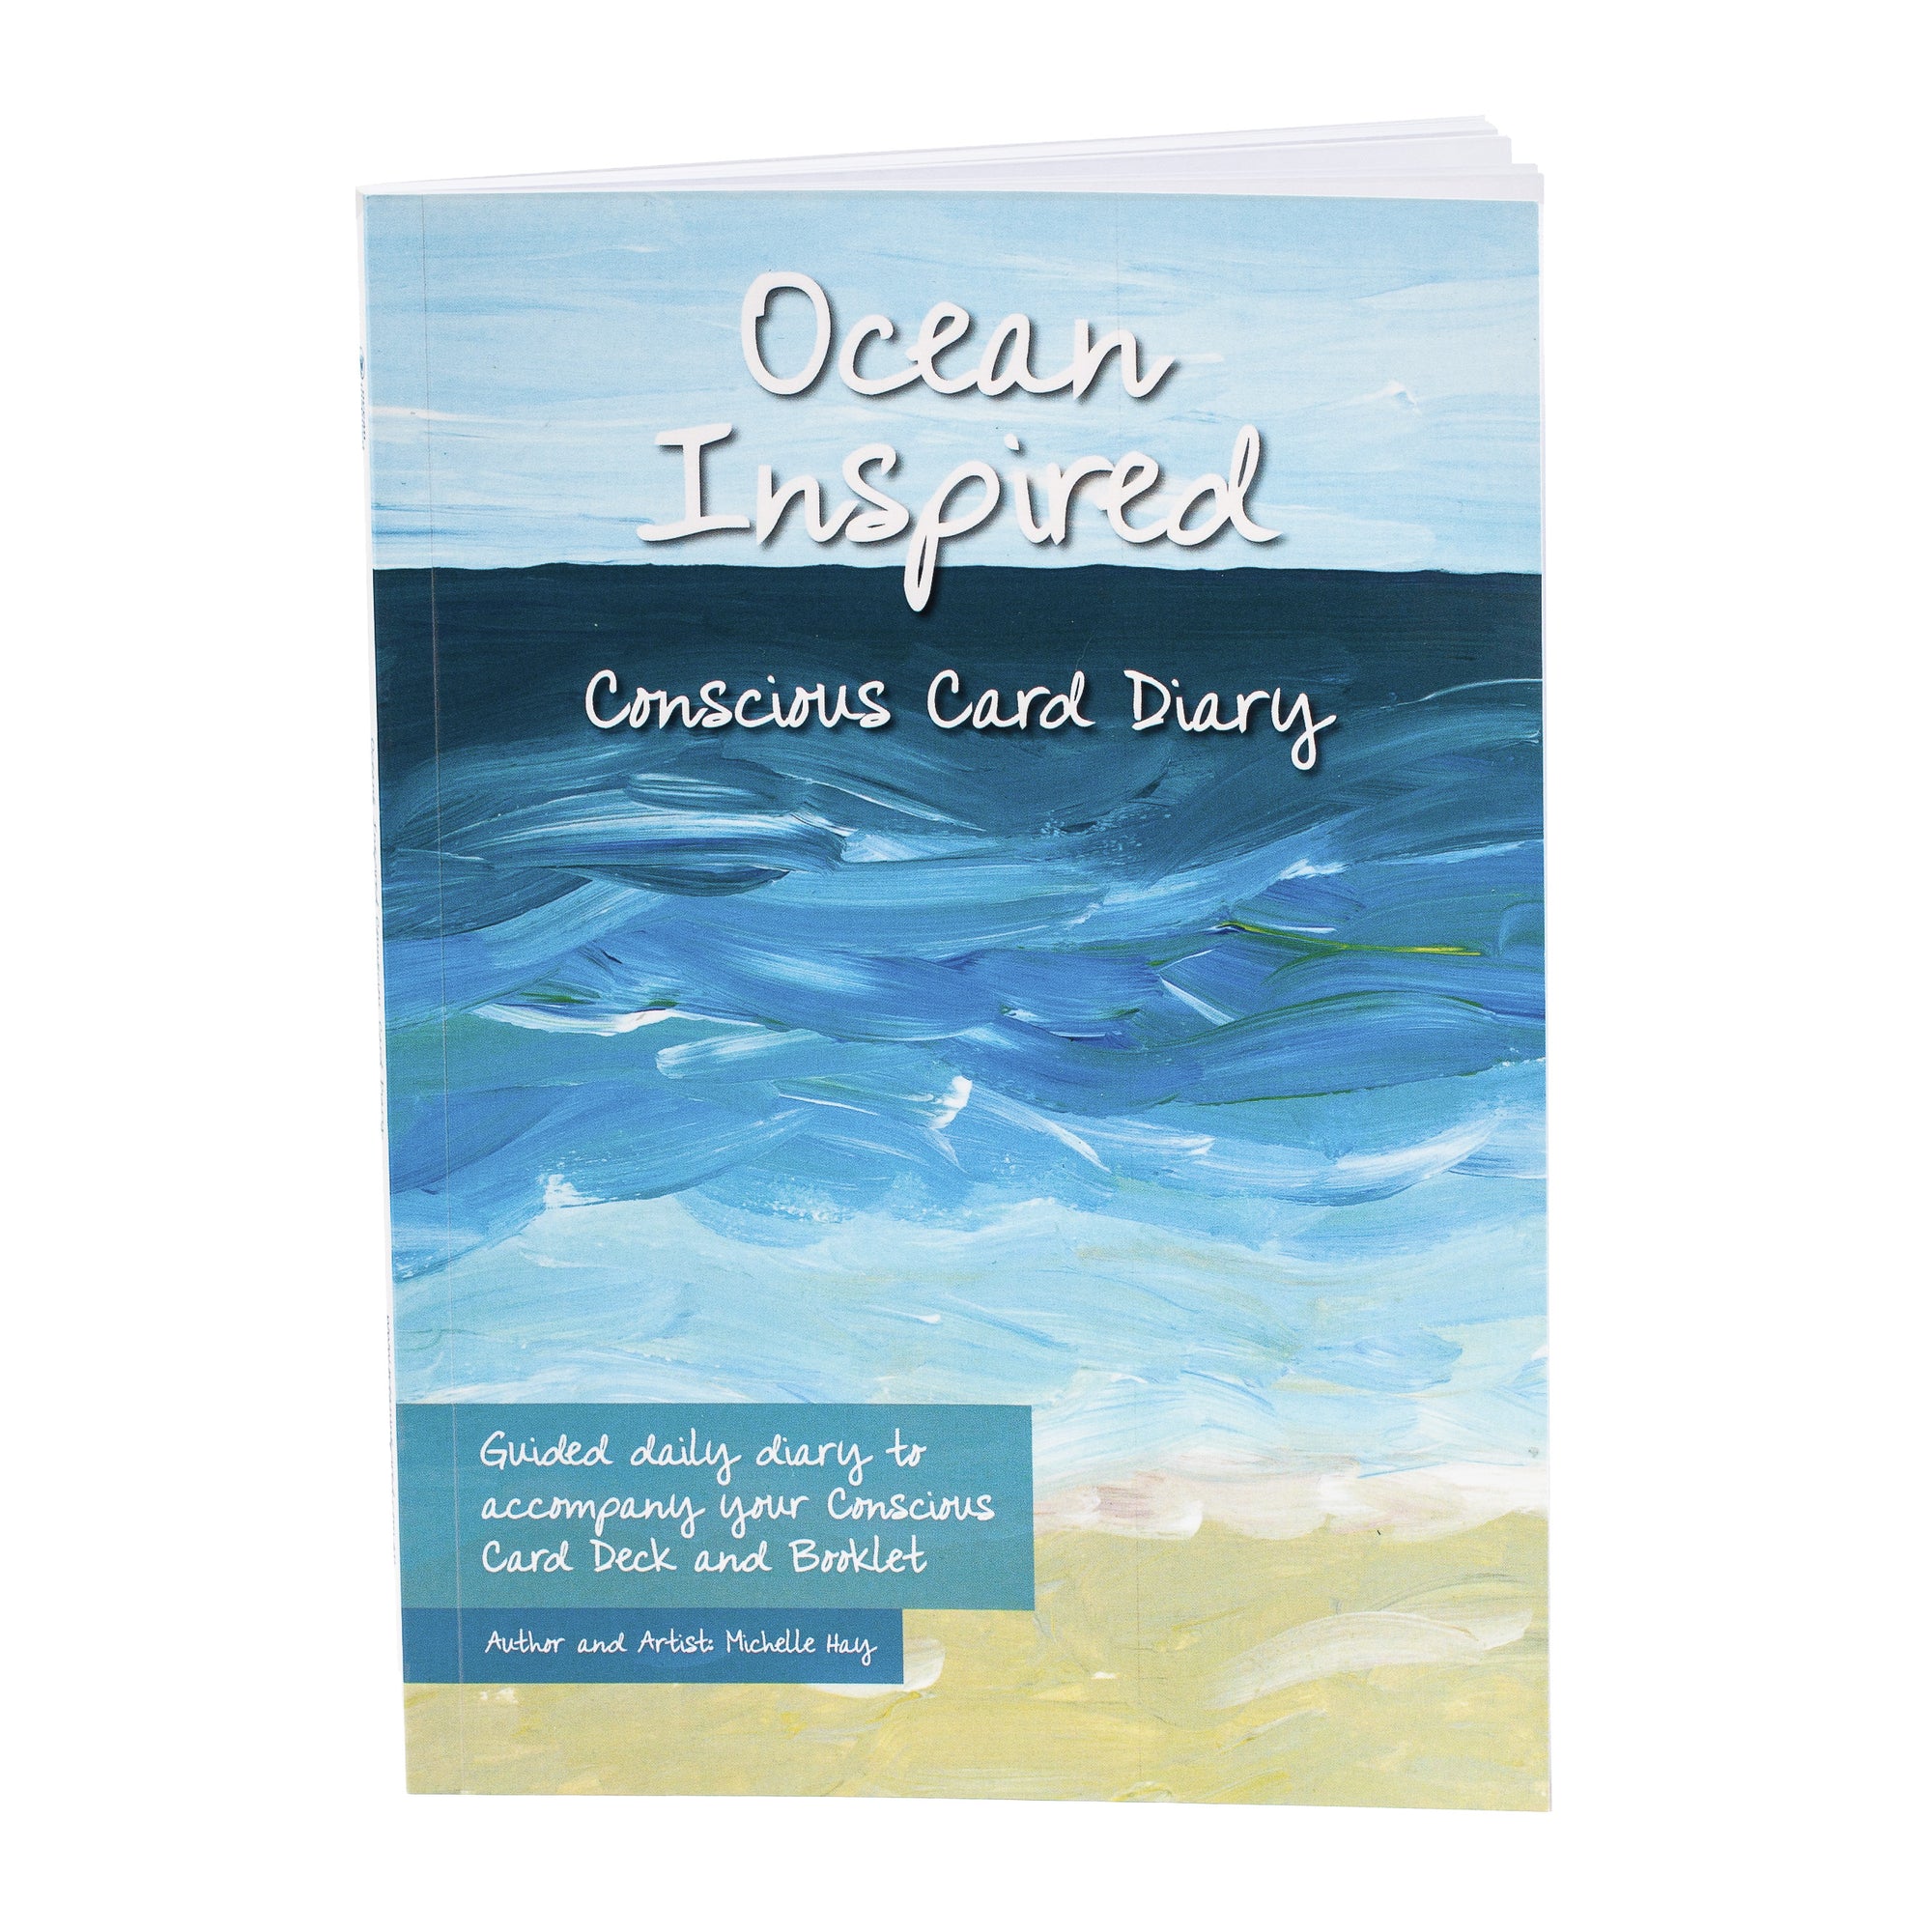 Conscious Card Diary